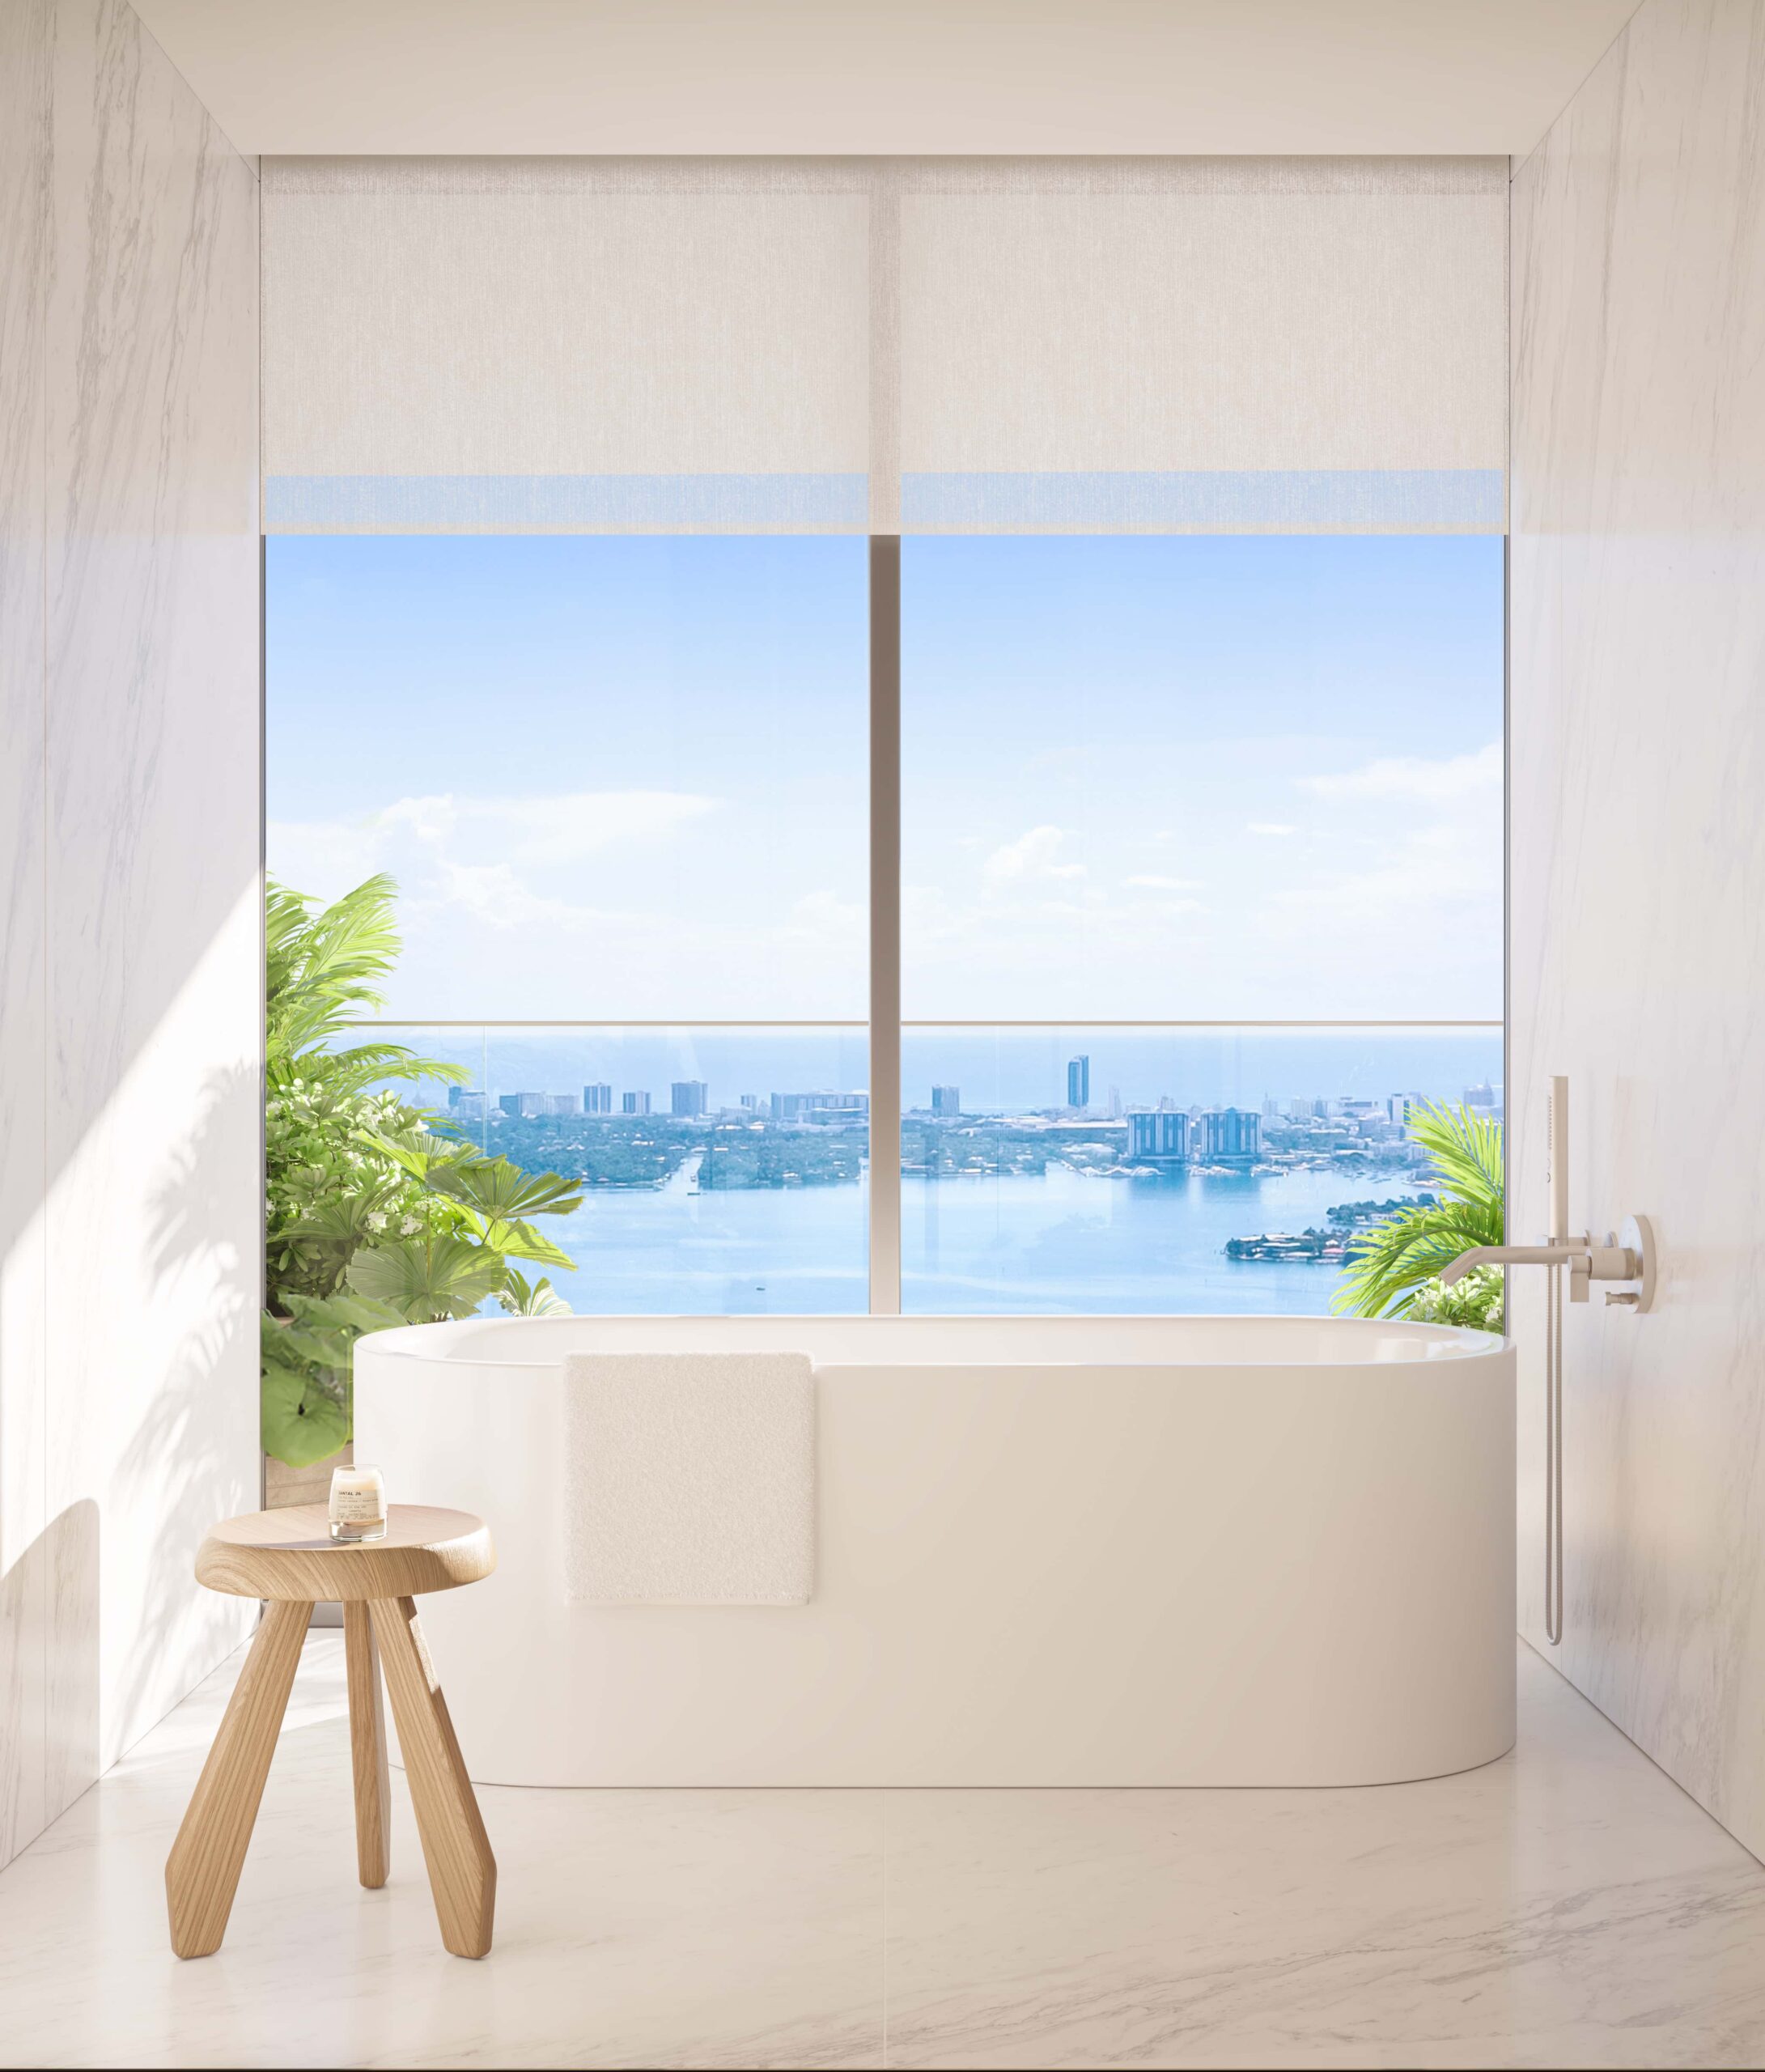 Bathrub with sea panoramic view